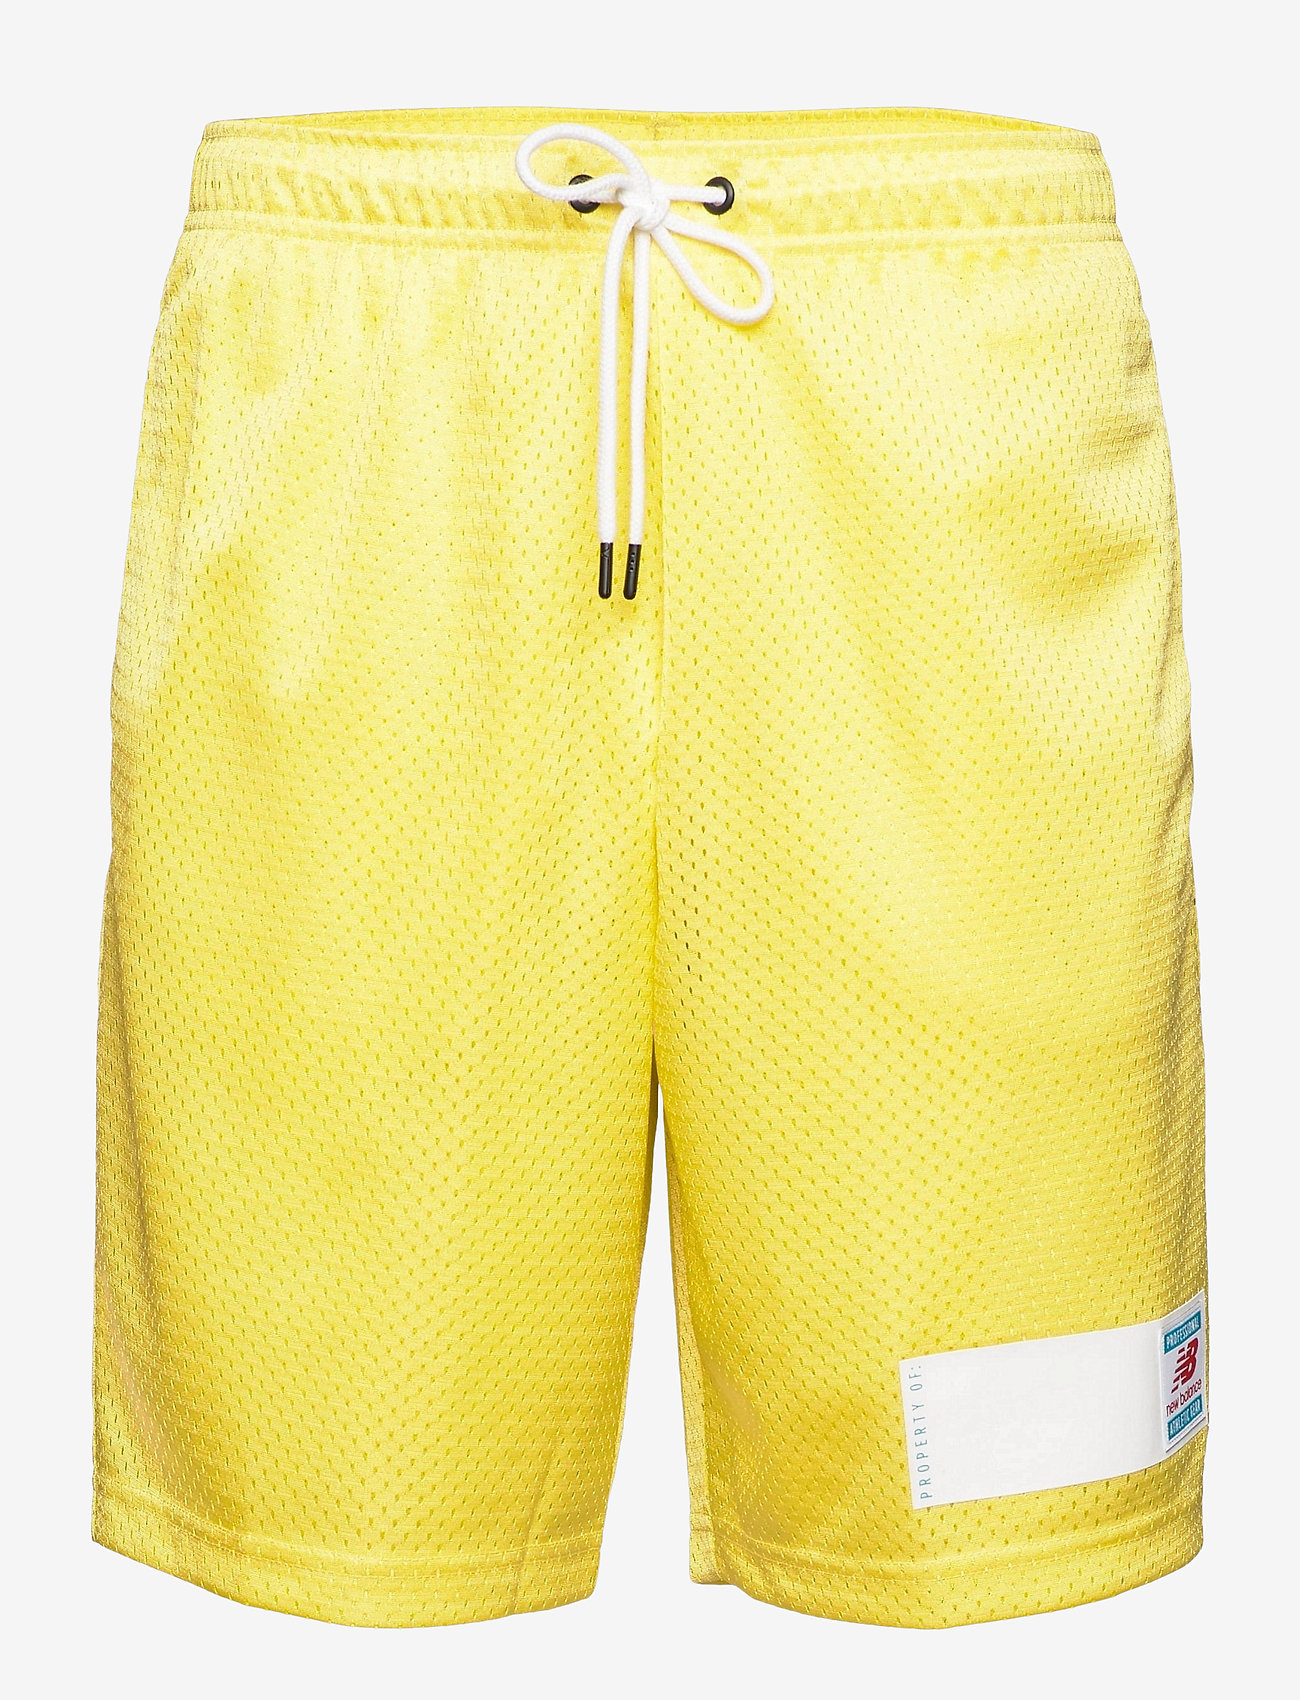 Buy > yellow new balance shorts > in stock